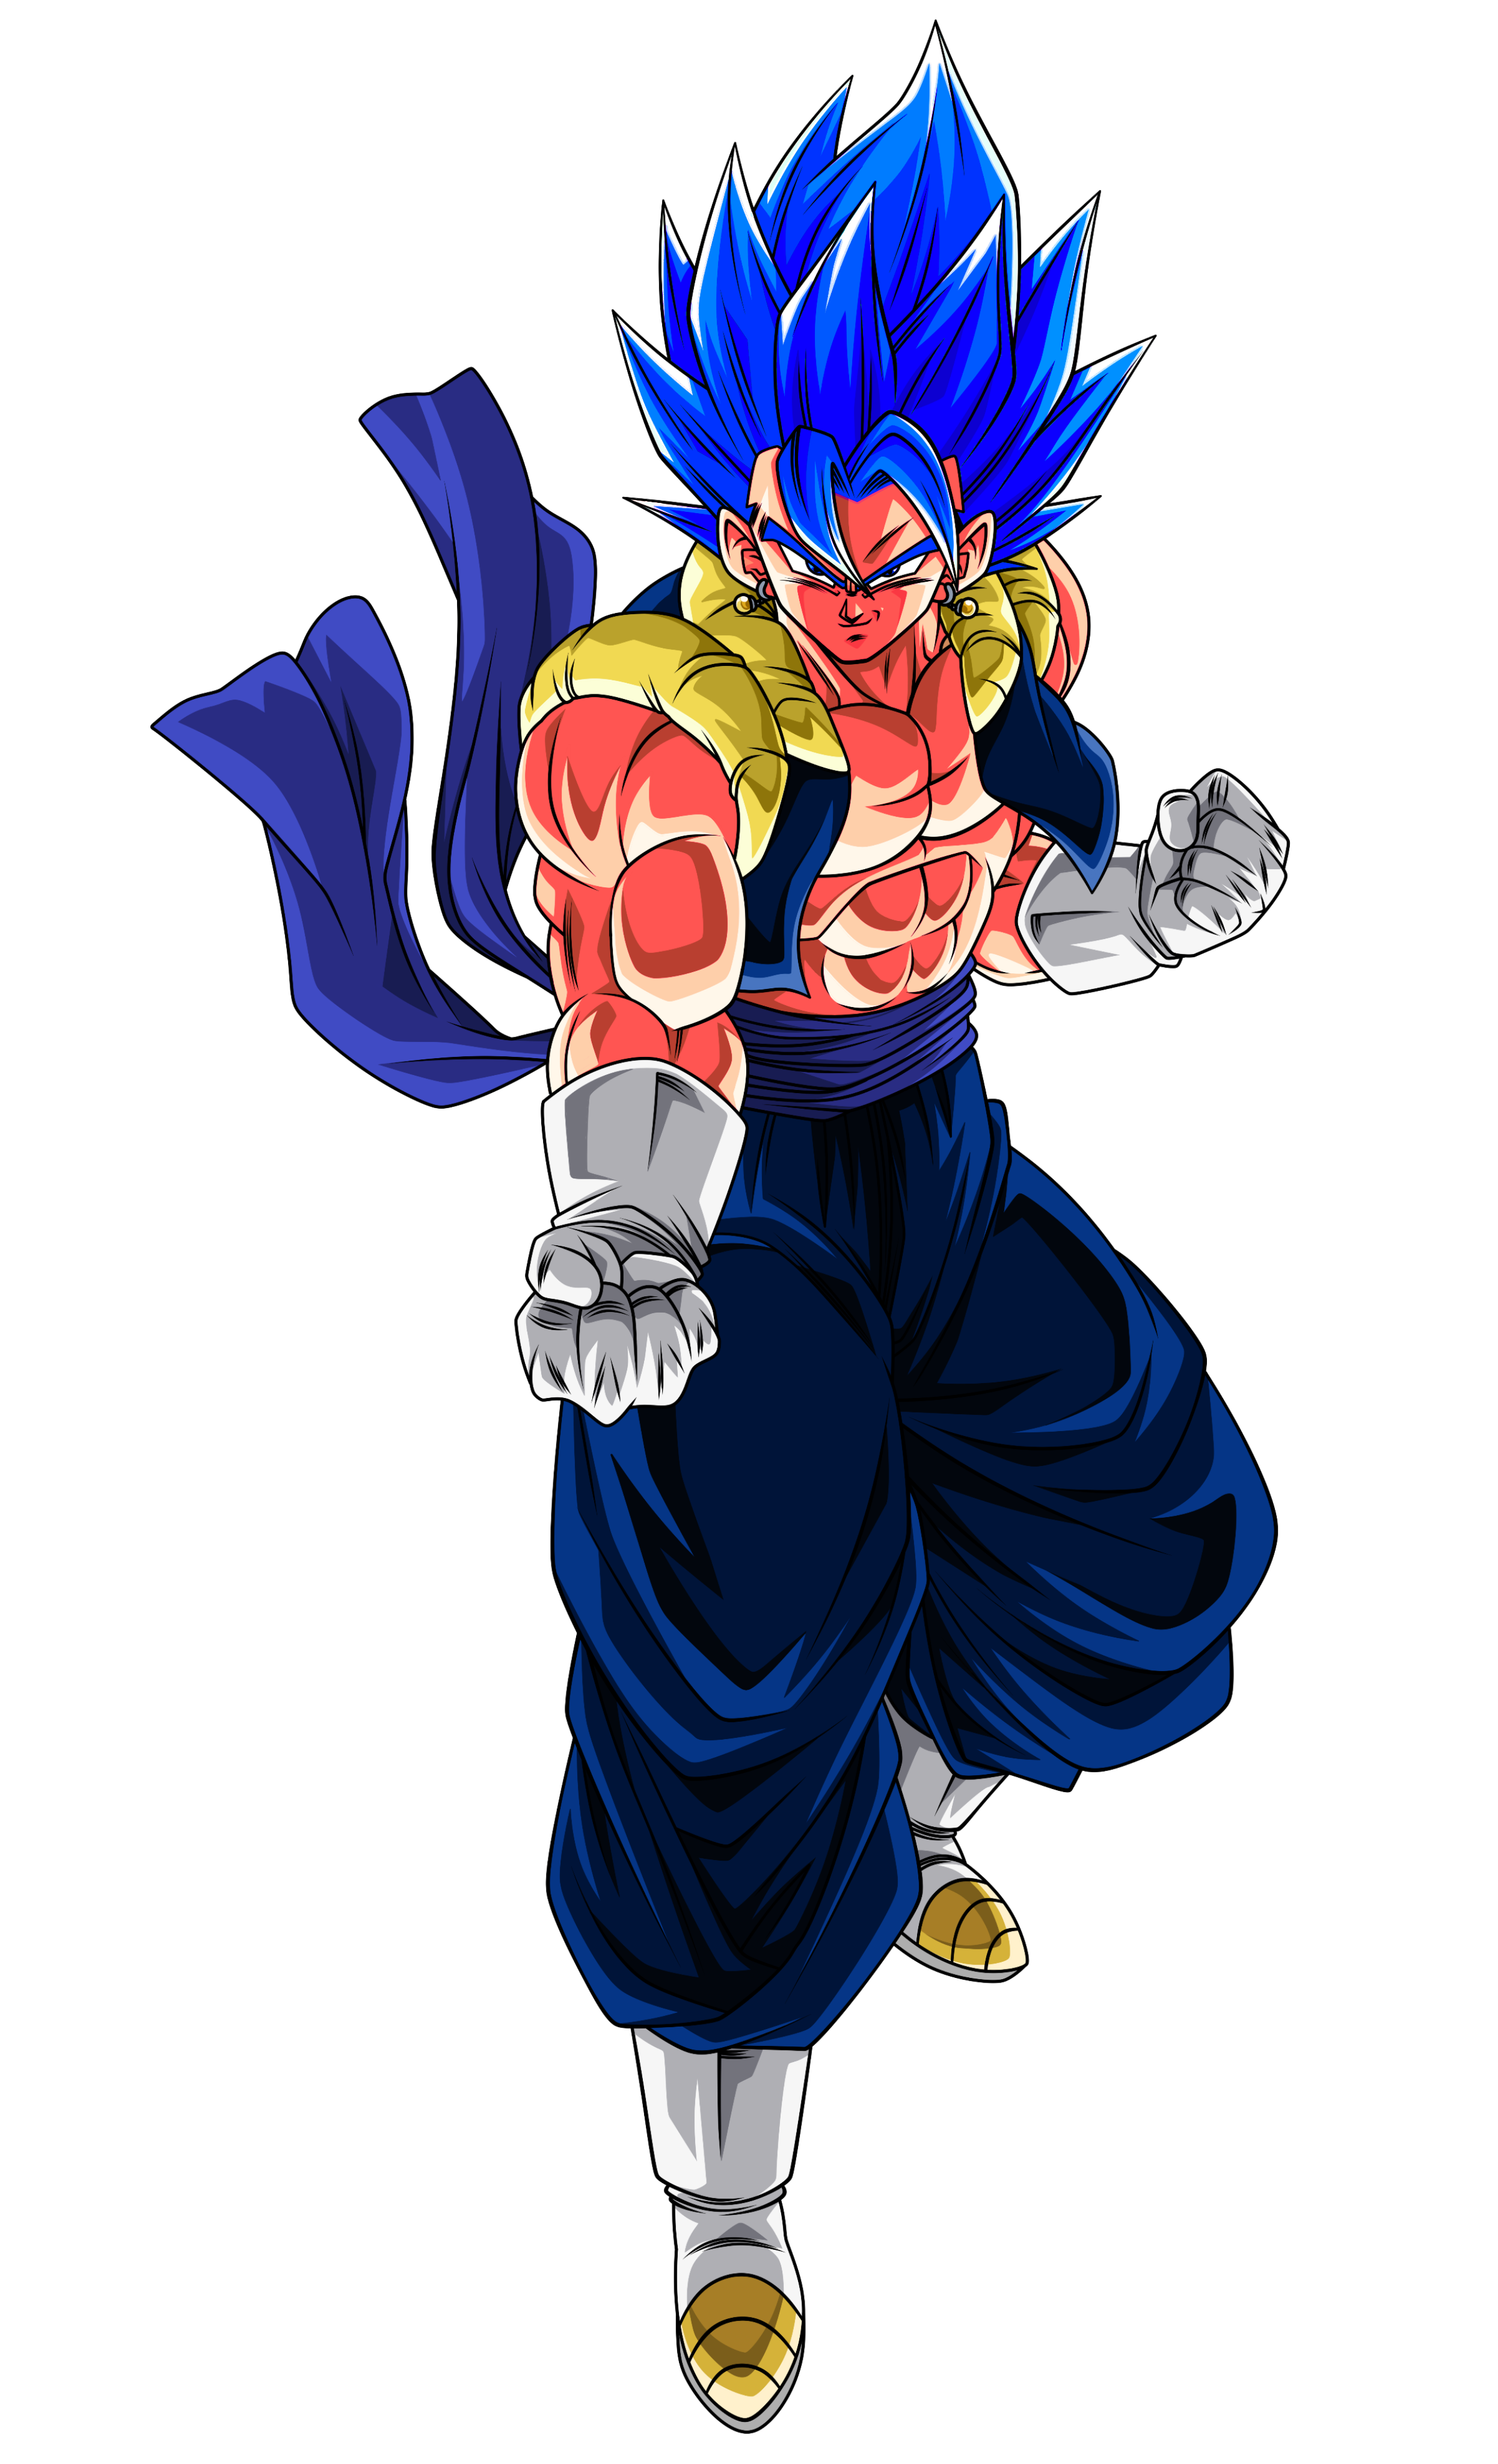 Goku Blue Evolution Kaioken x20 by DanXL4 on DeviantArt